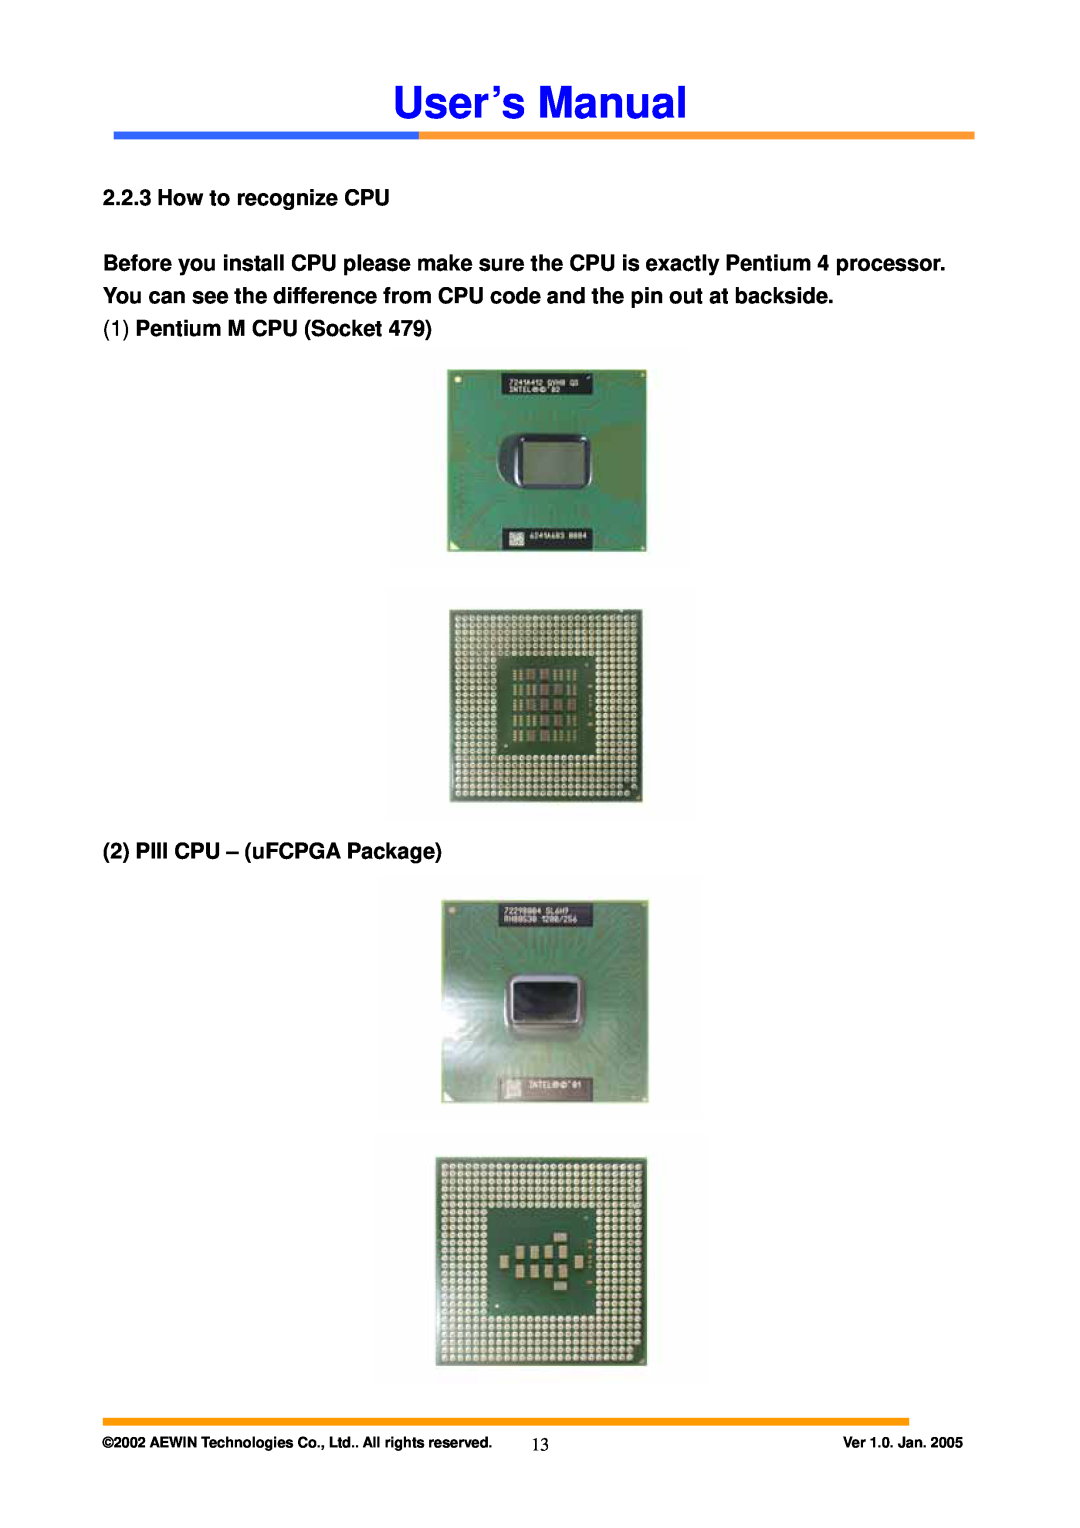 Intel AW-A795 How to recognize CPU, Pentium M CPU Socket 2 PIII CPU - uFCPGA Package, User’s Manual, Ver 1.0. Jan 